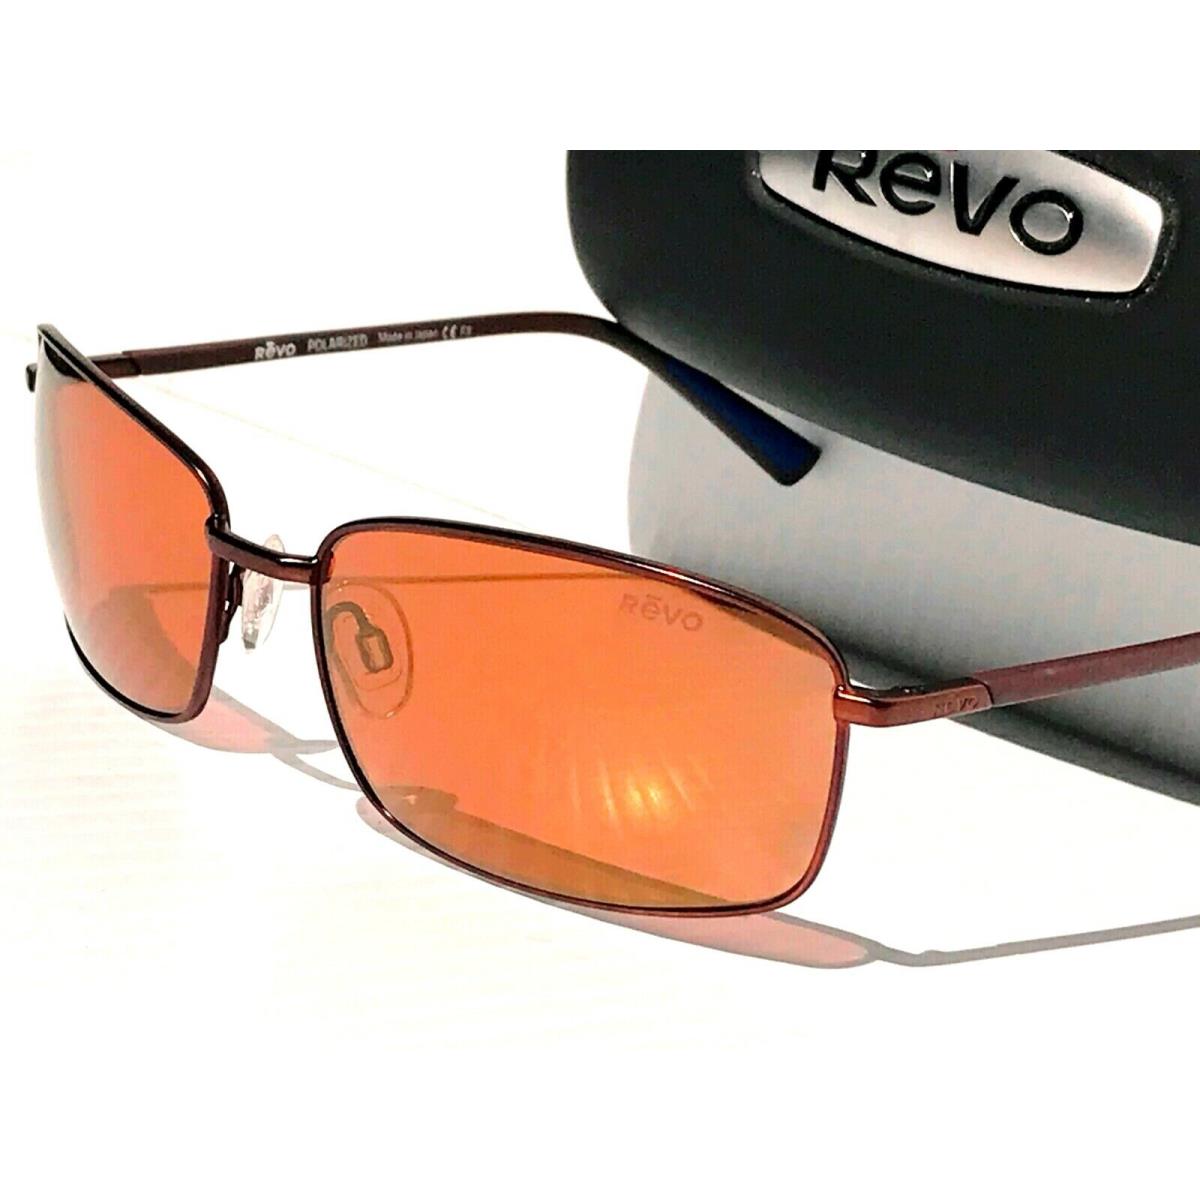 Revo sunglasses Tate - Brown Frame, Road Lens